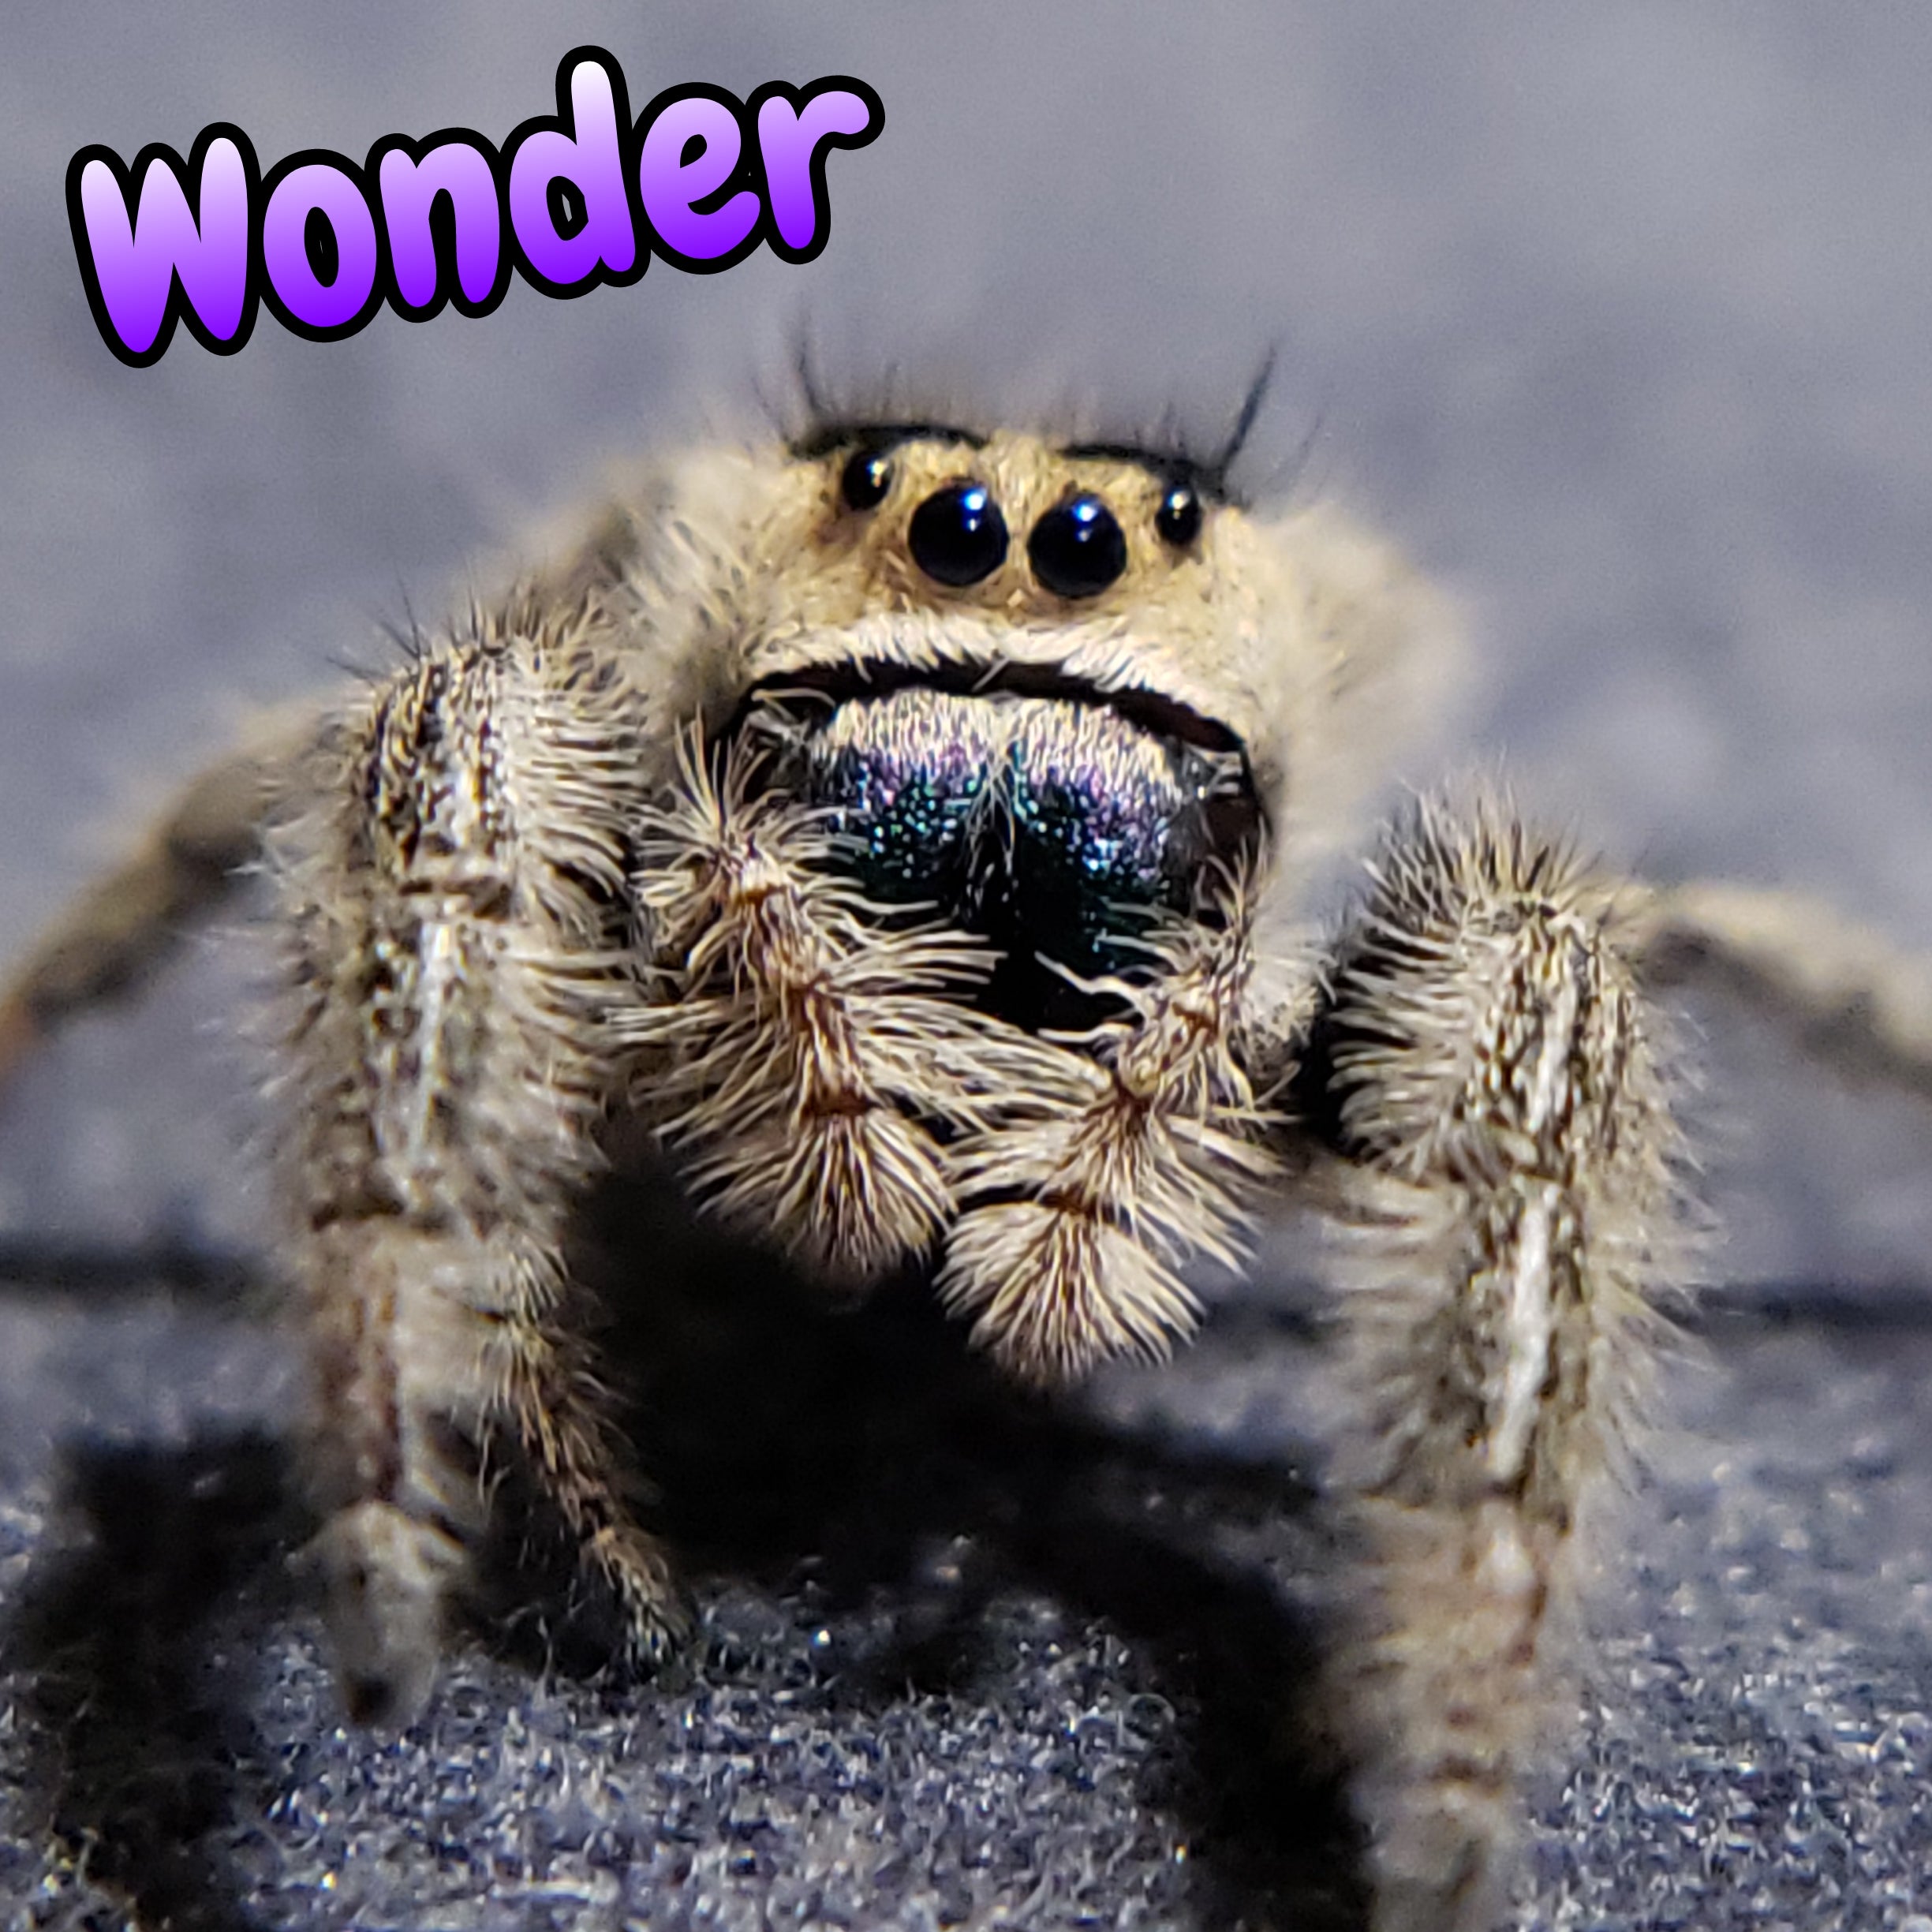 Regal Jumping Spider "Wonder"